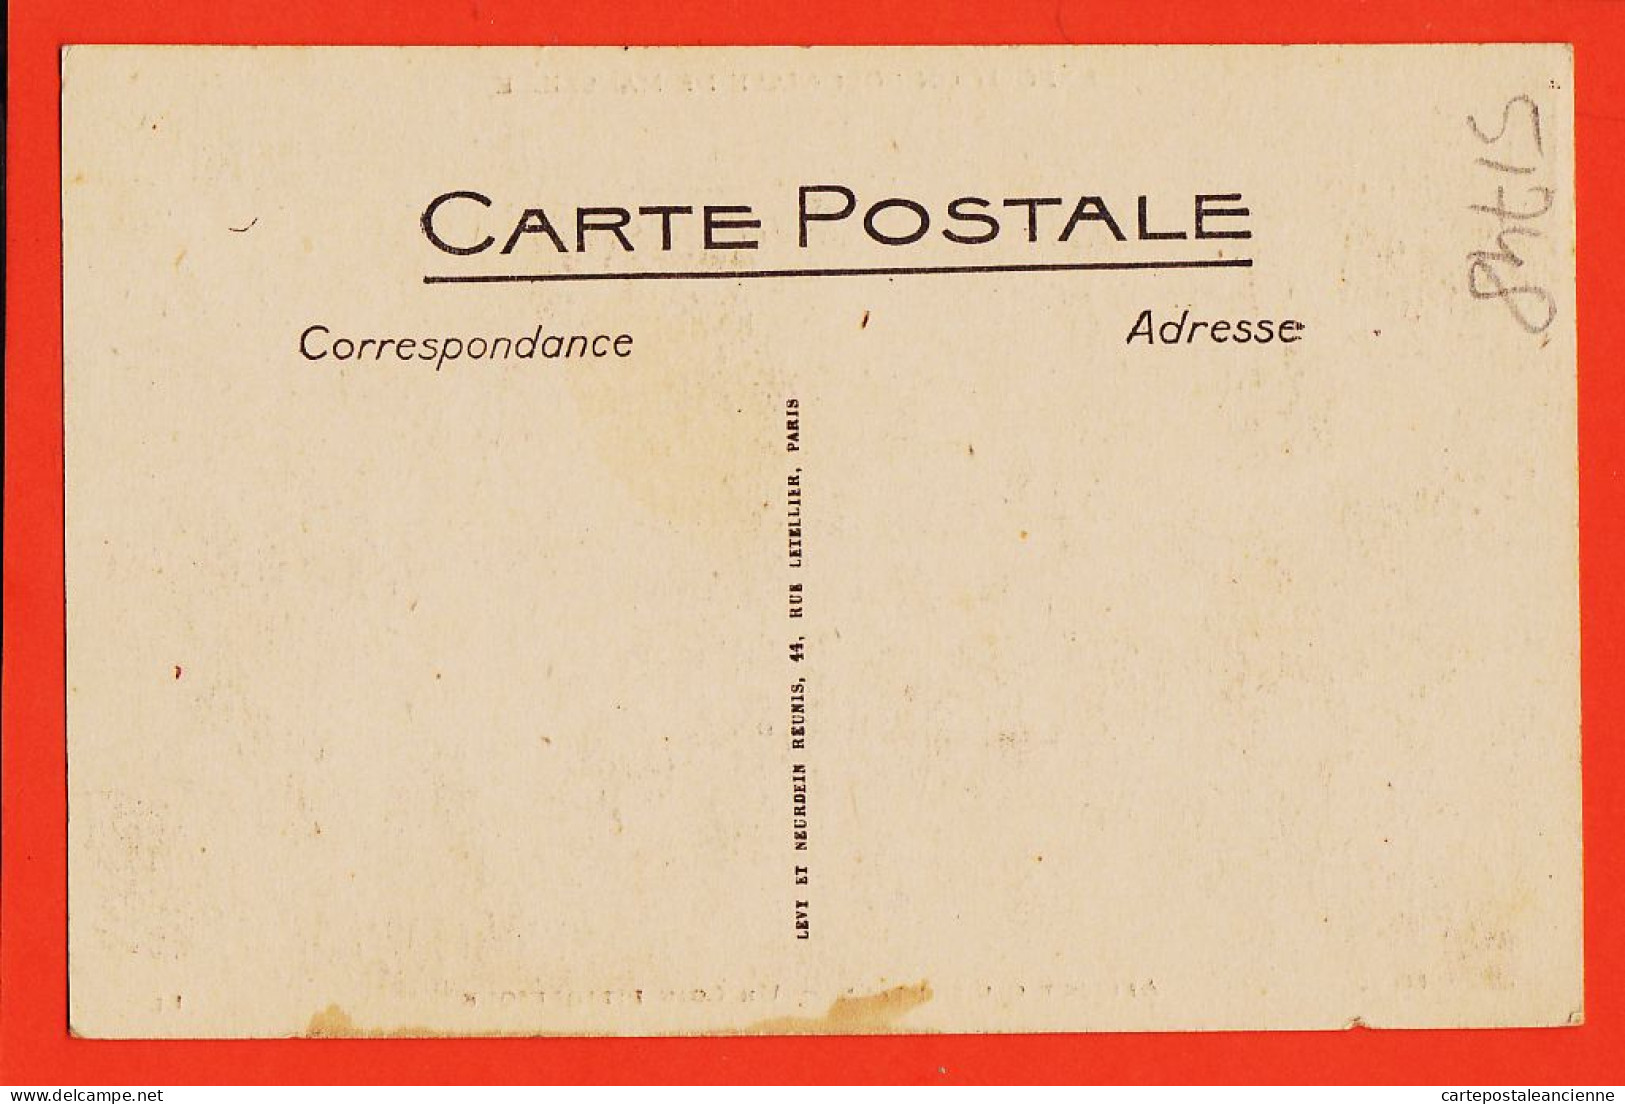 10704 ● MARSEILLE (13) Exposition Coloniale Afrique Occidentale 1922 Un Coin Pittoresque LEVY NEURDEIN 50 - Mostra Elettricità E Altre